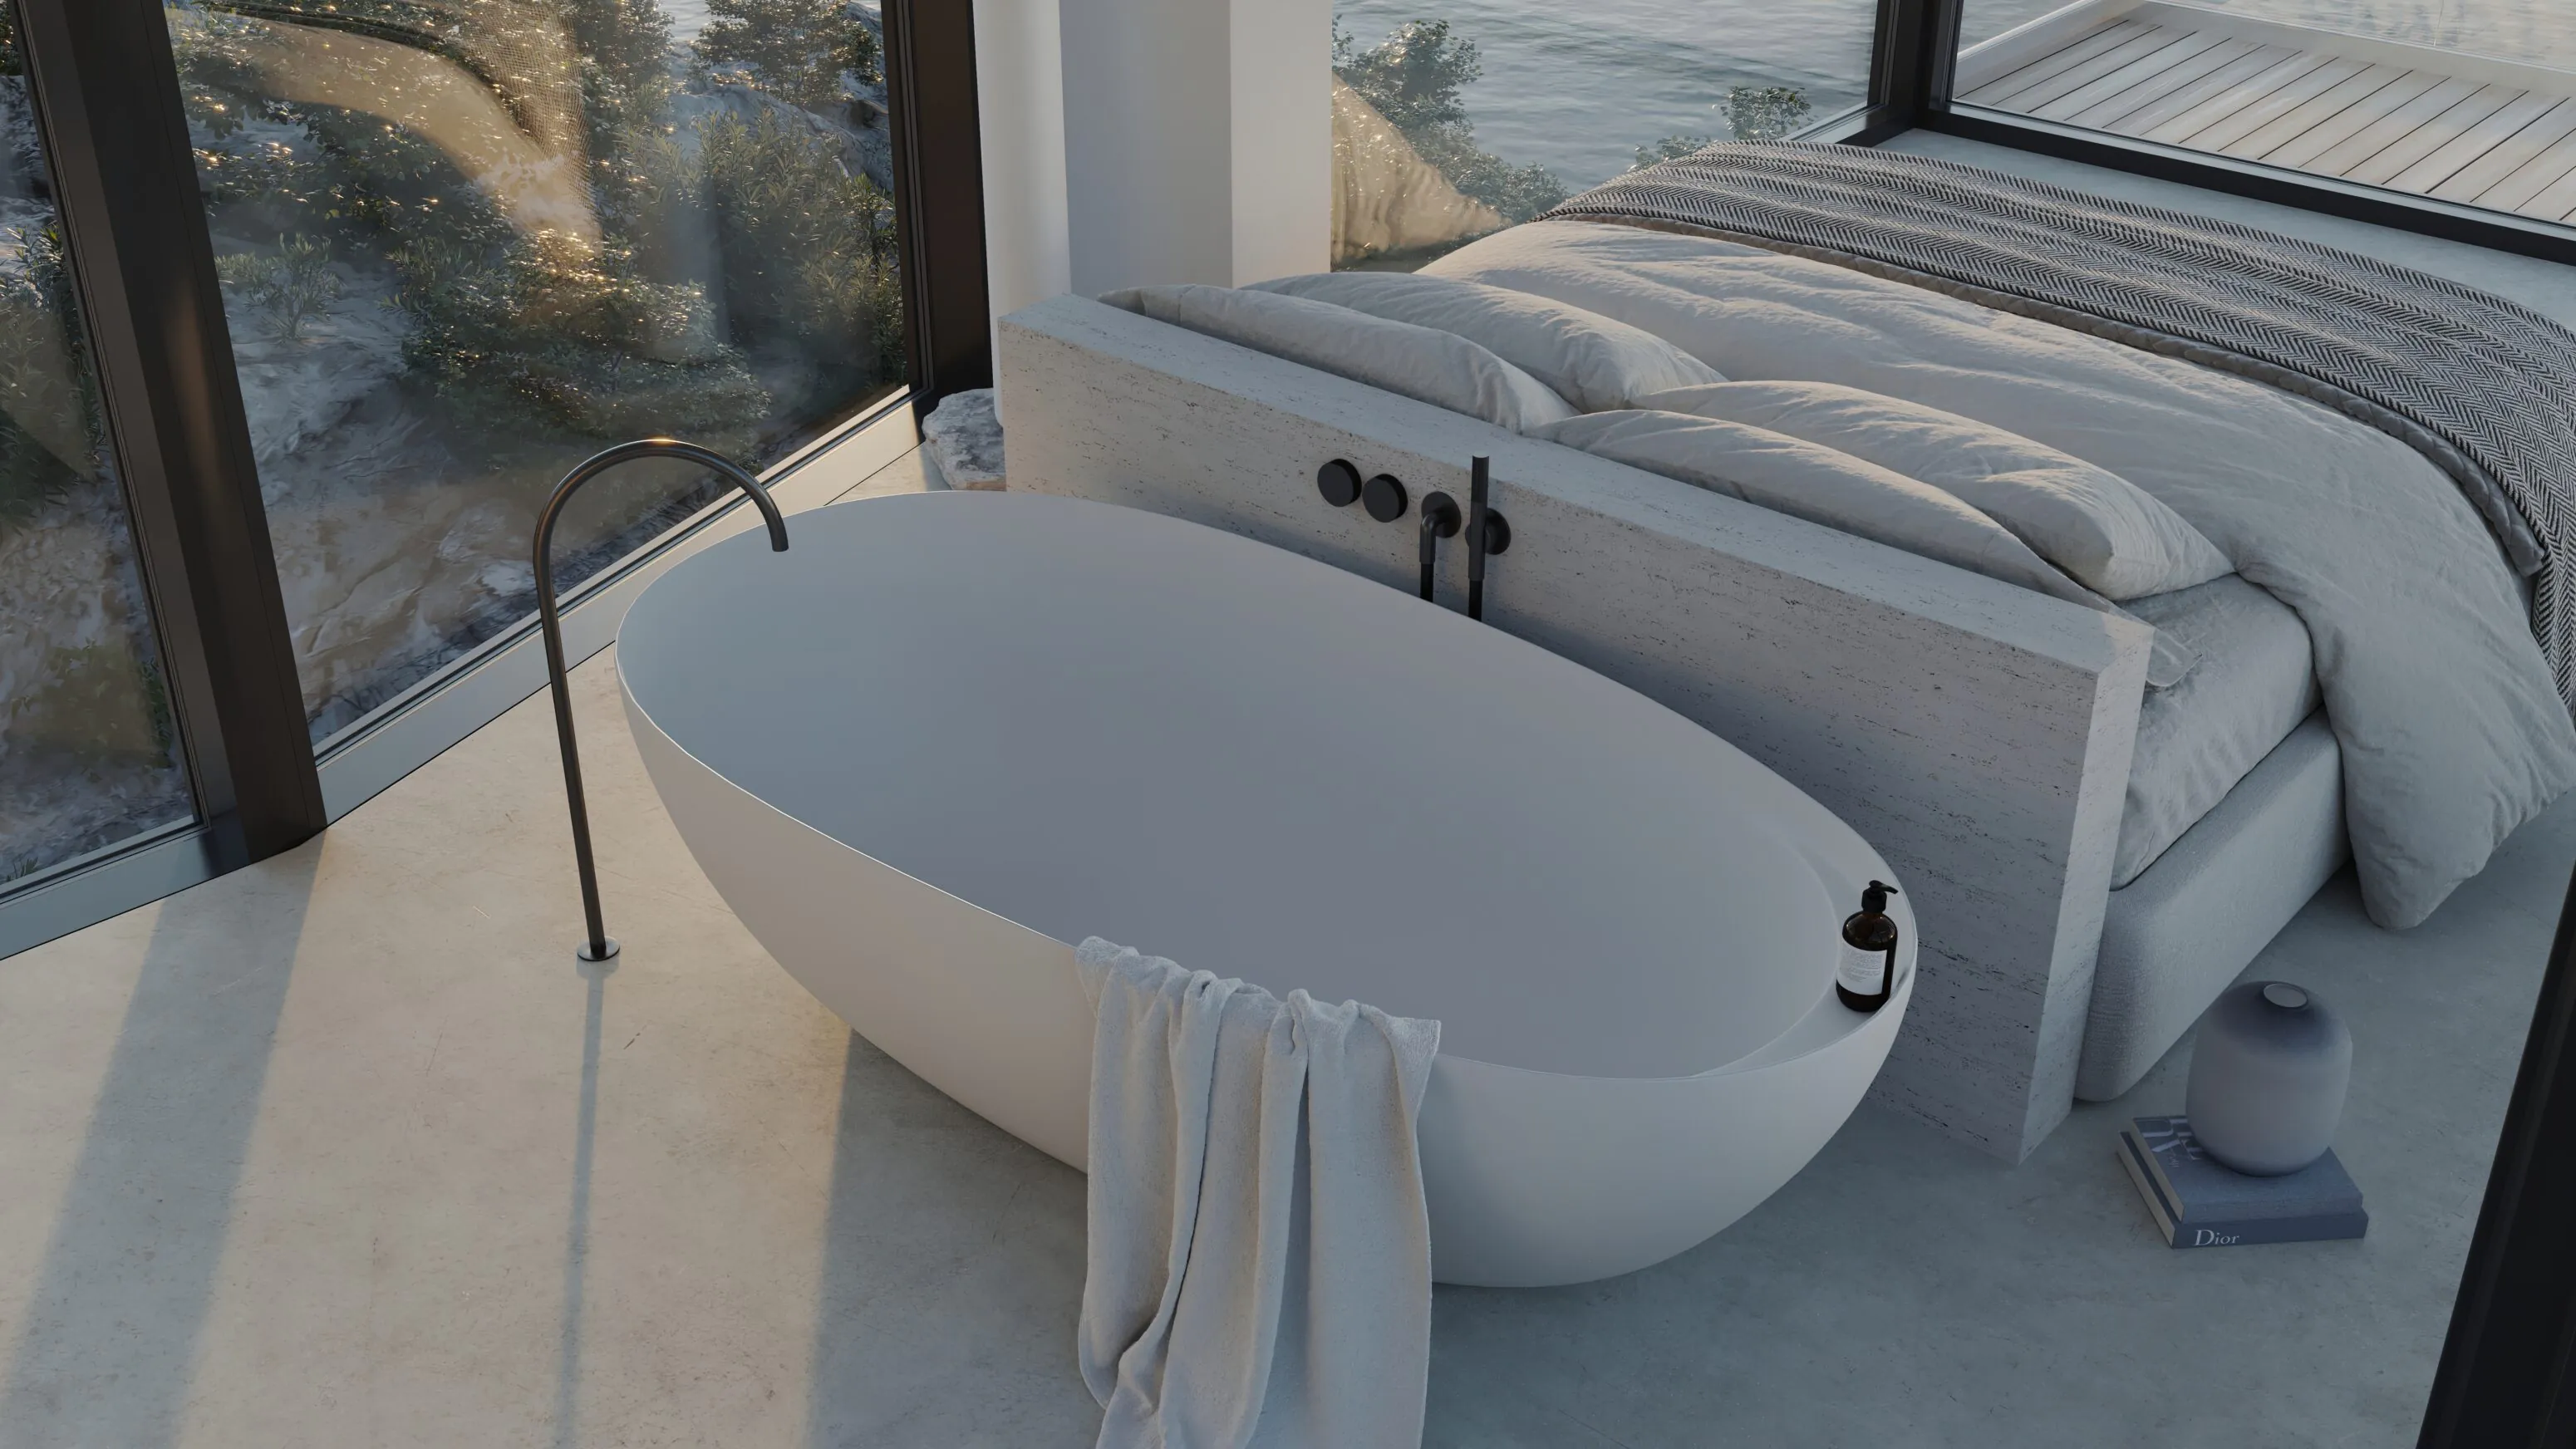 Cote d'Azur Villa спальня-ванная комната вид сверху